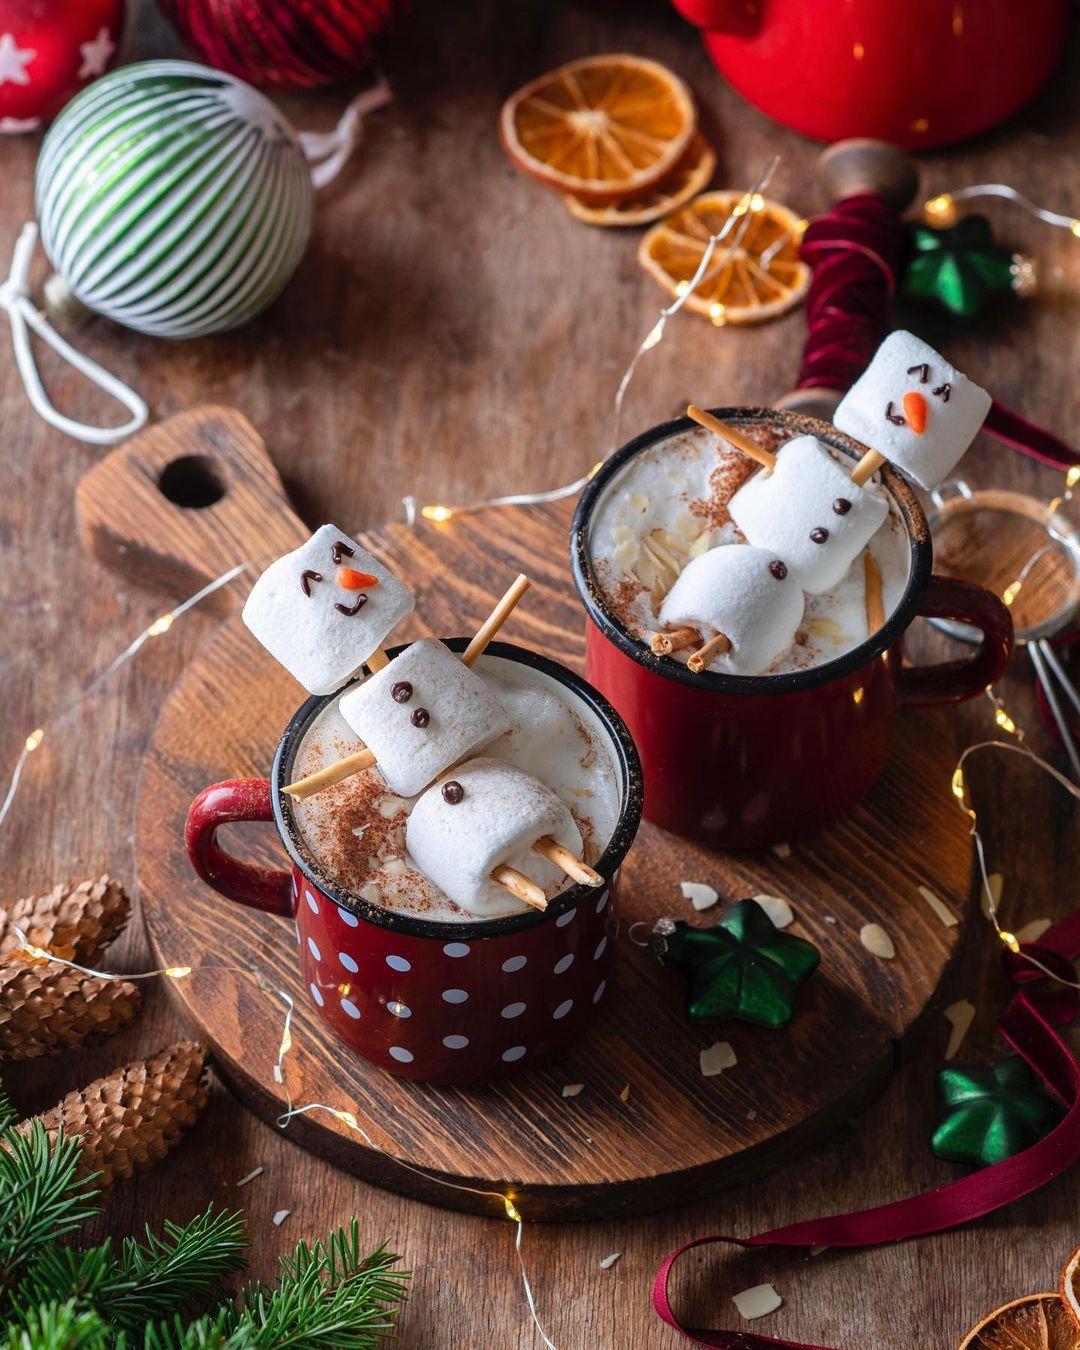 class="content__text"
 Hot chocolate with marshmallow snowmen ⛄️⛄️✨
Какао со снеговичками из маршмеллоу✨Милые такие ребятки получились😍
 #фудфото #фудфотография #фудфотограф #фудблог #фудблогер #какао #новыйгод #рождество #горячийшоколад #foodphotography #foodstyling #foodphotographyandstyling #hotchocolate #marshmallow #snowman #snowmen #christmas 
 